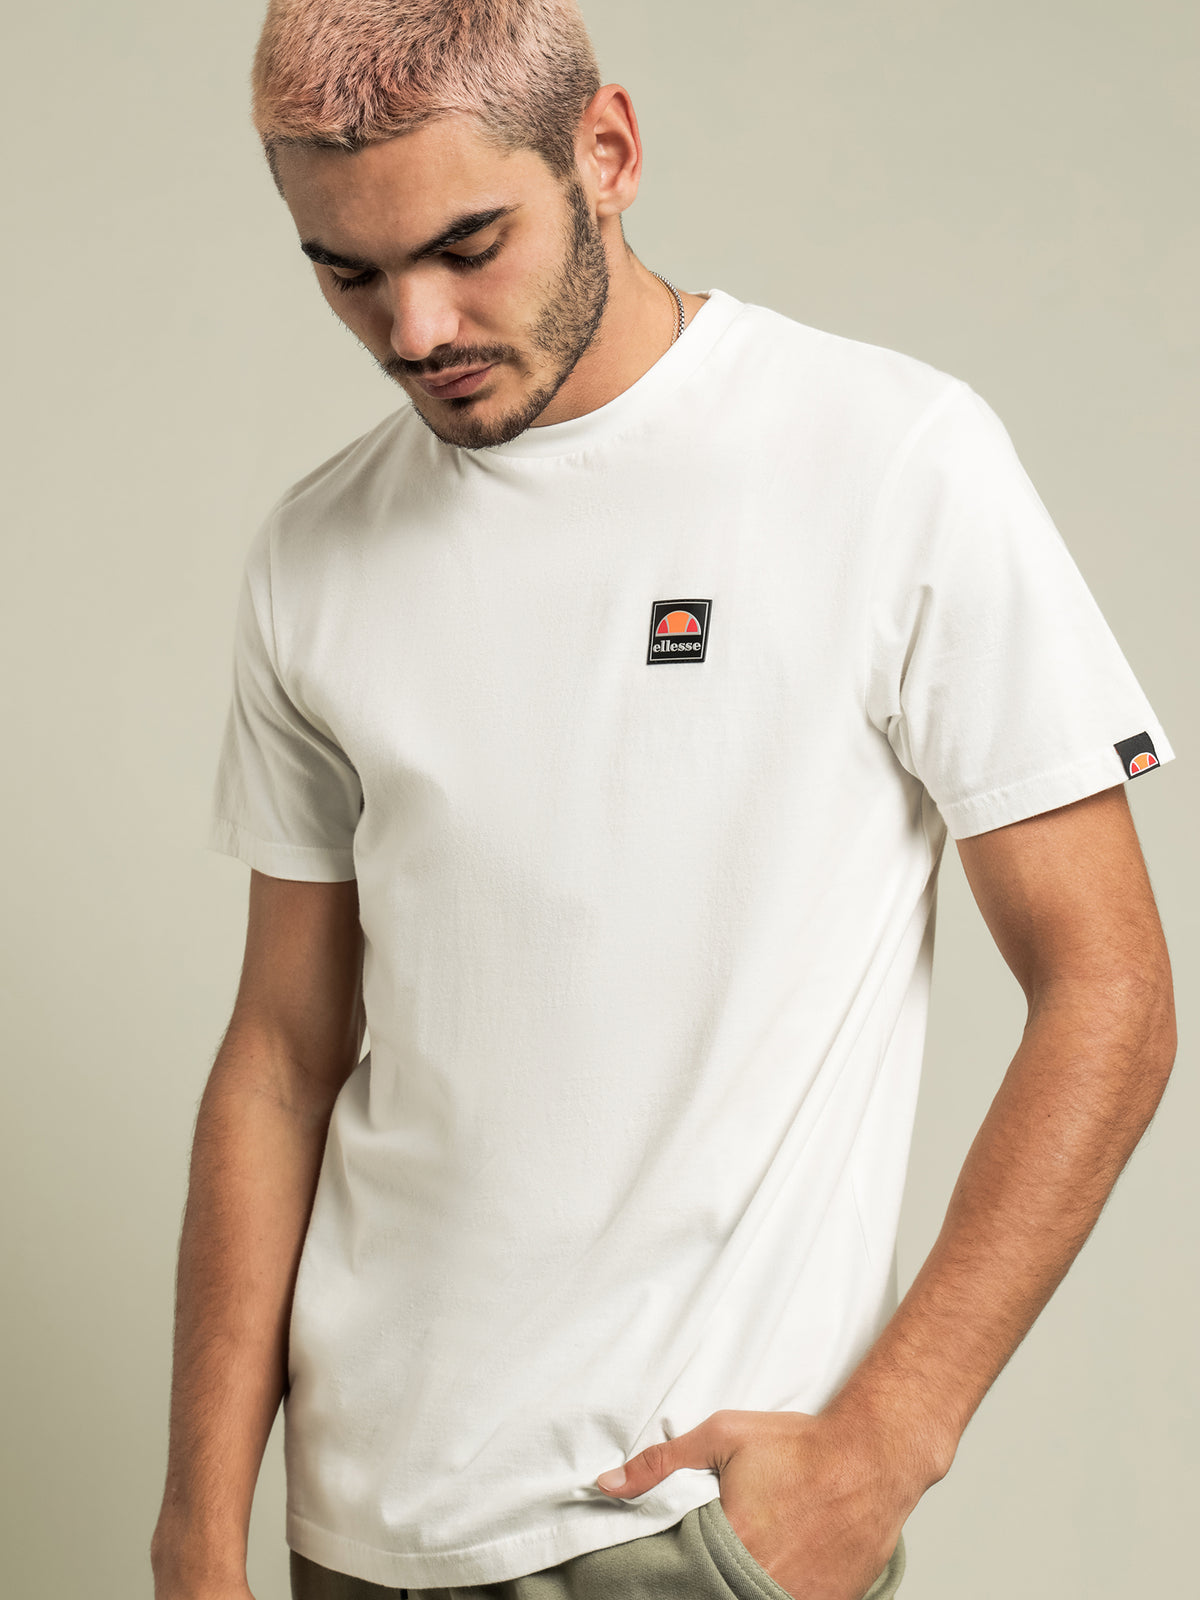 Jourdain T-Shirt in Off White